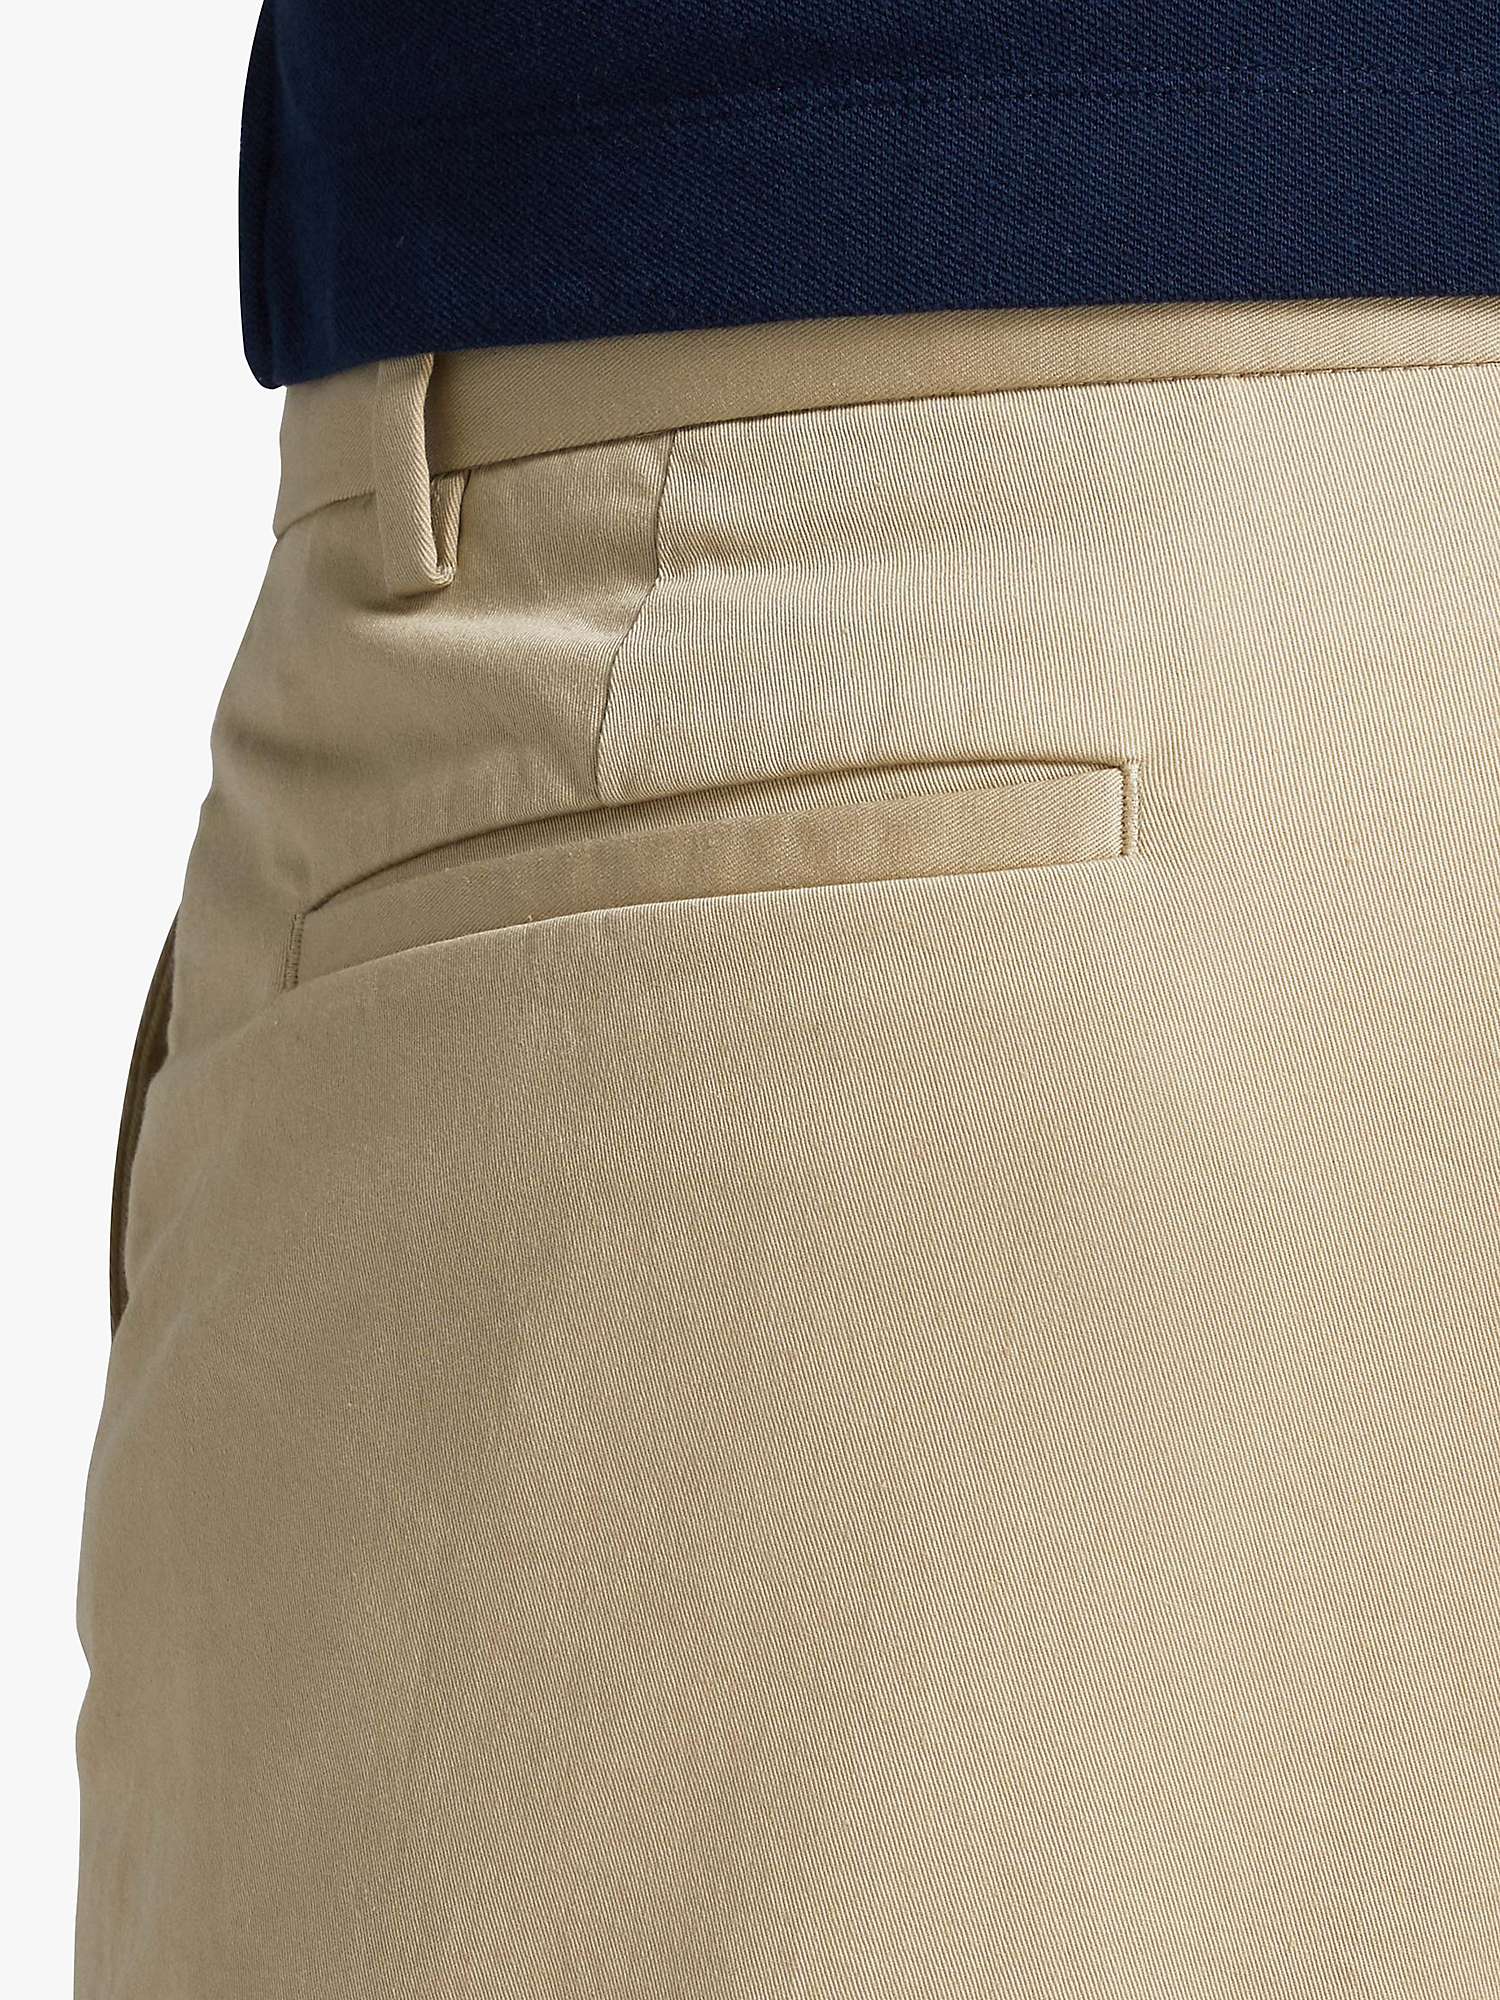 Buy SPOKE Sharps Cotton Blend Broad Thigh Shorts Online at johnlewis.com